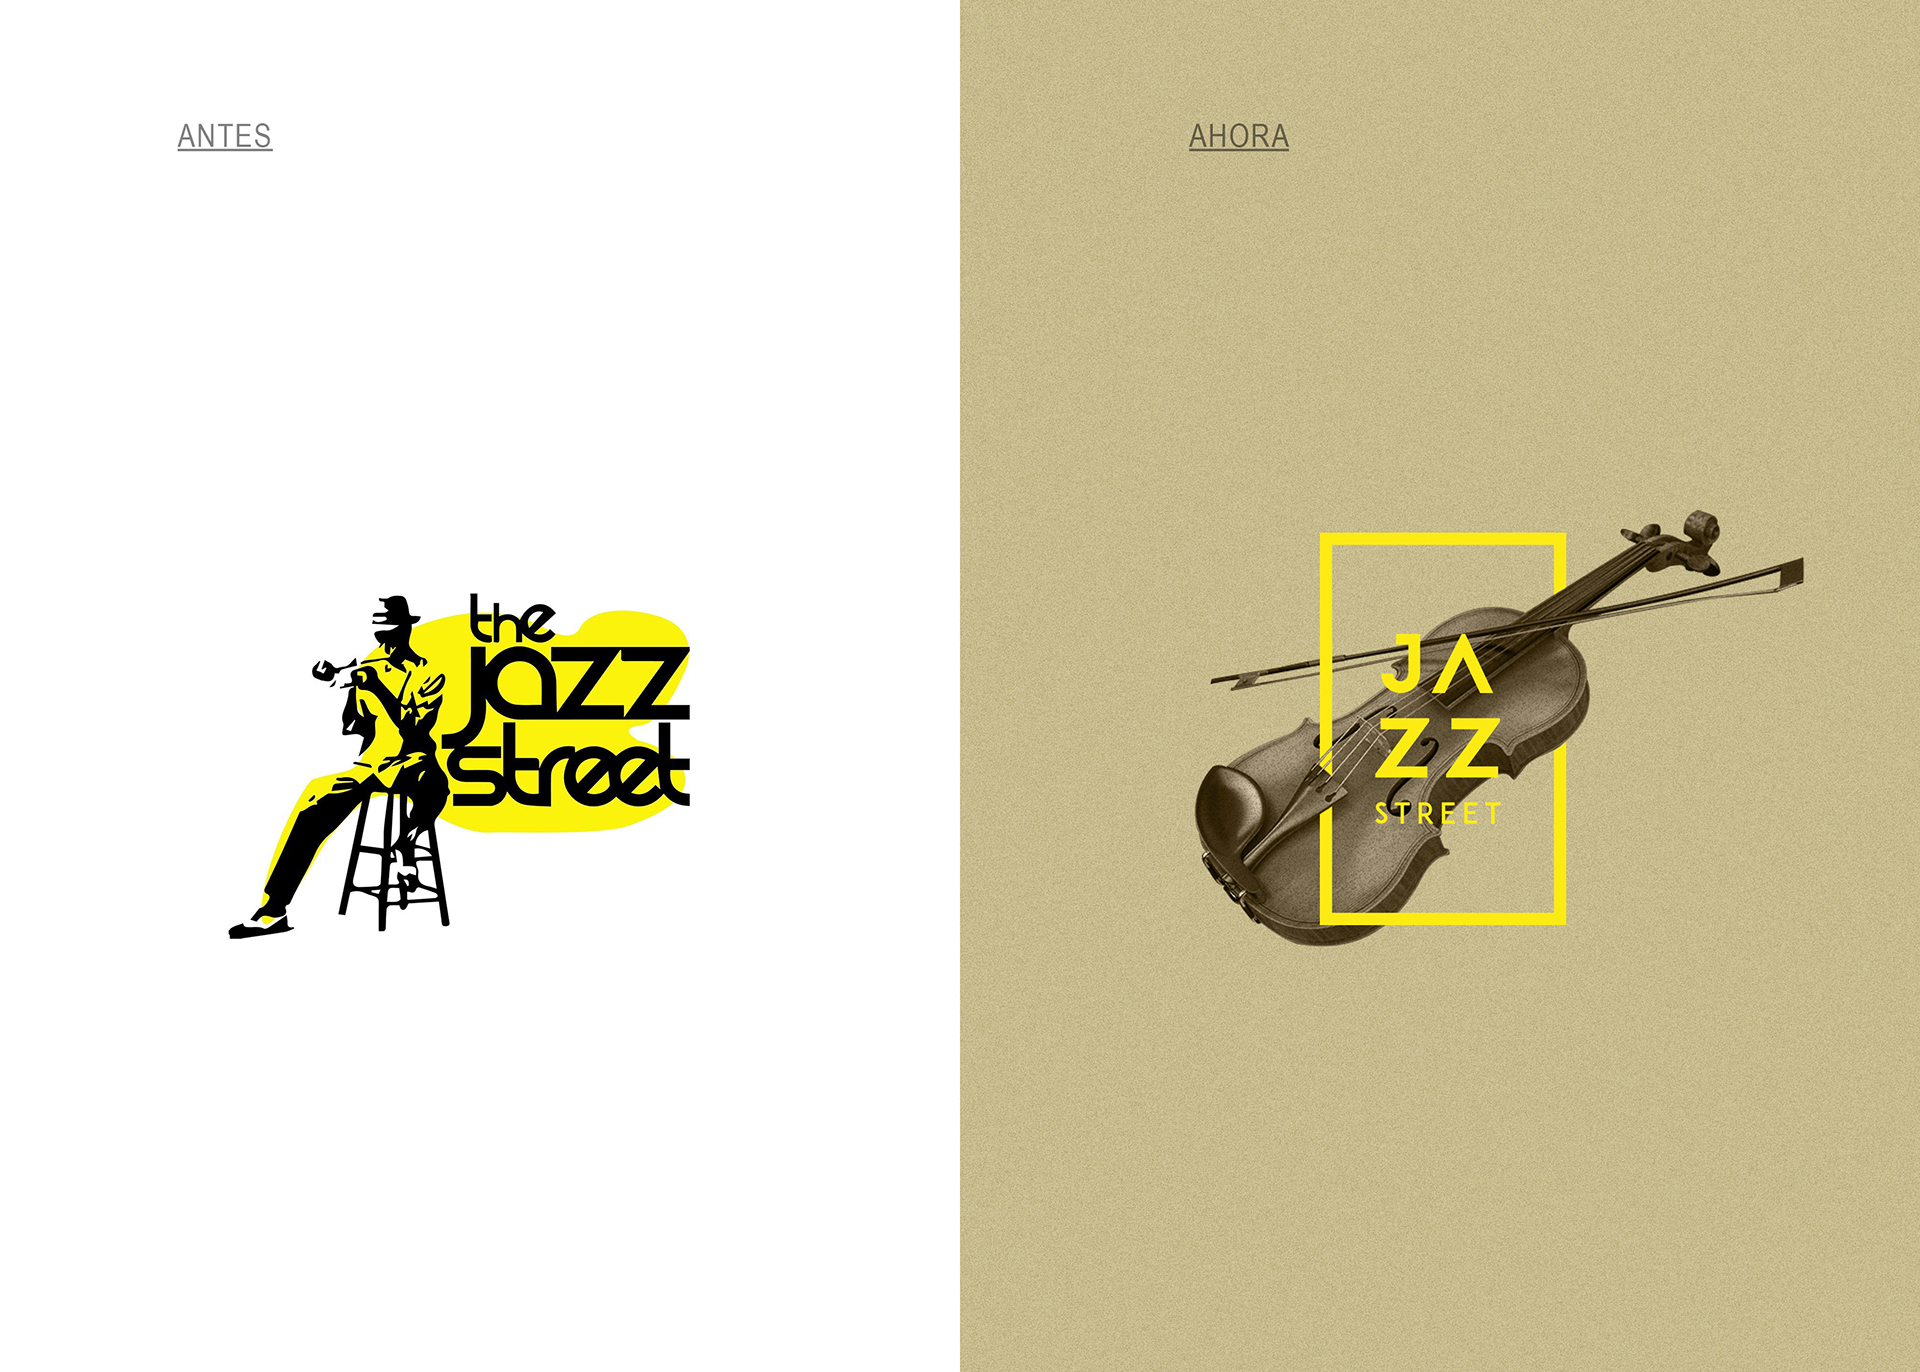 Jazz Street视觉形象设计